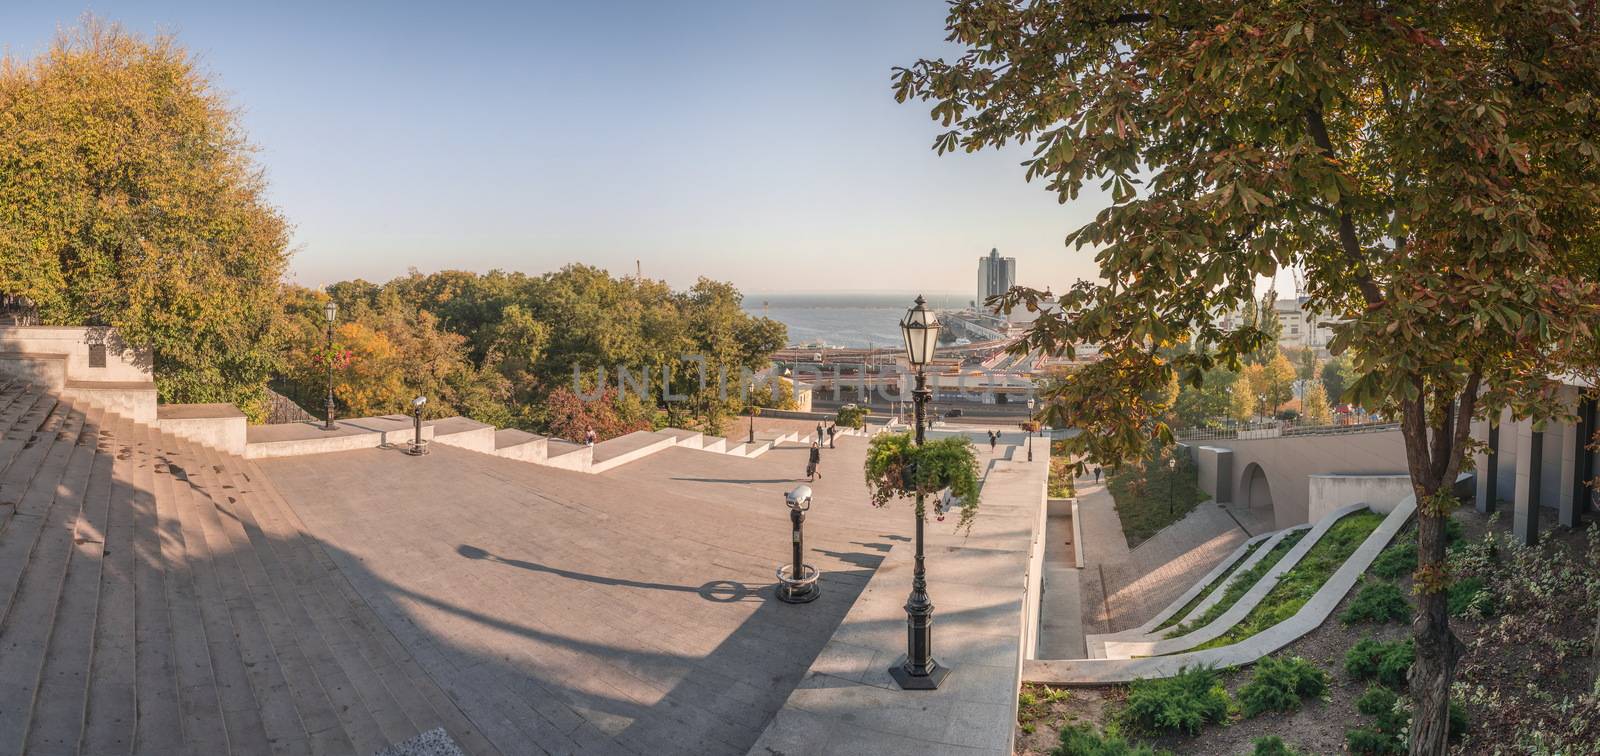 Odessa seaside boulevard in the autumn morning by Multipedia